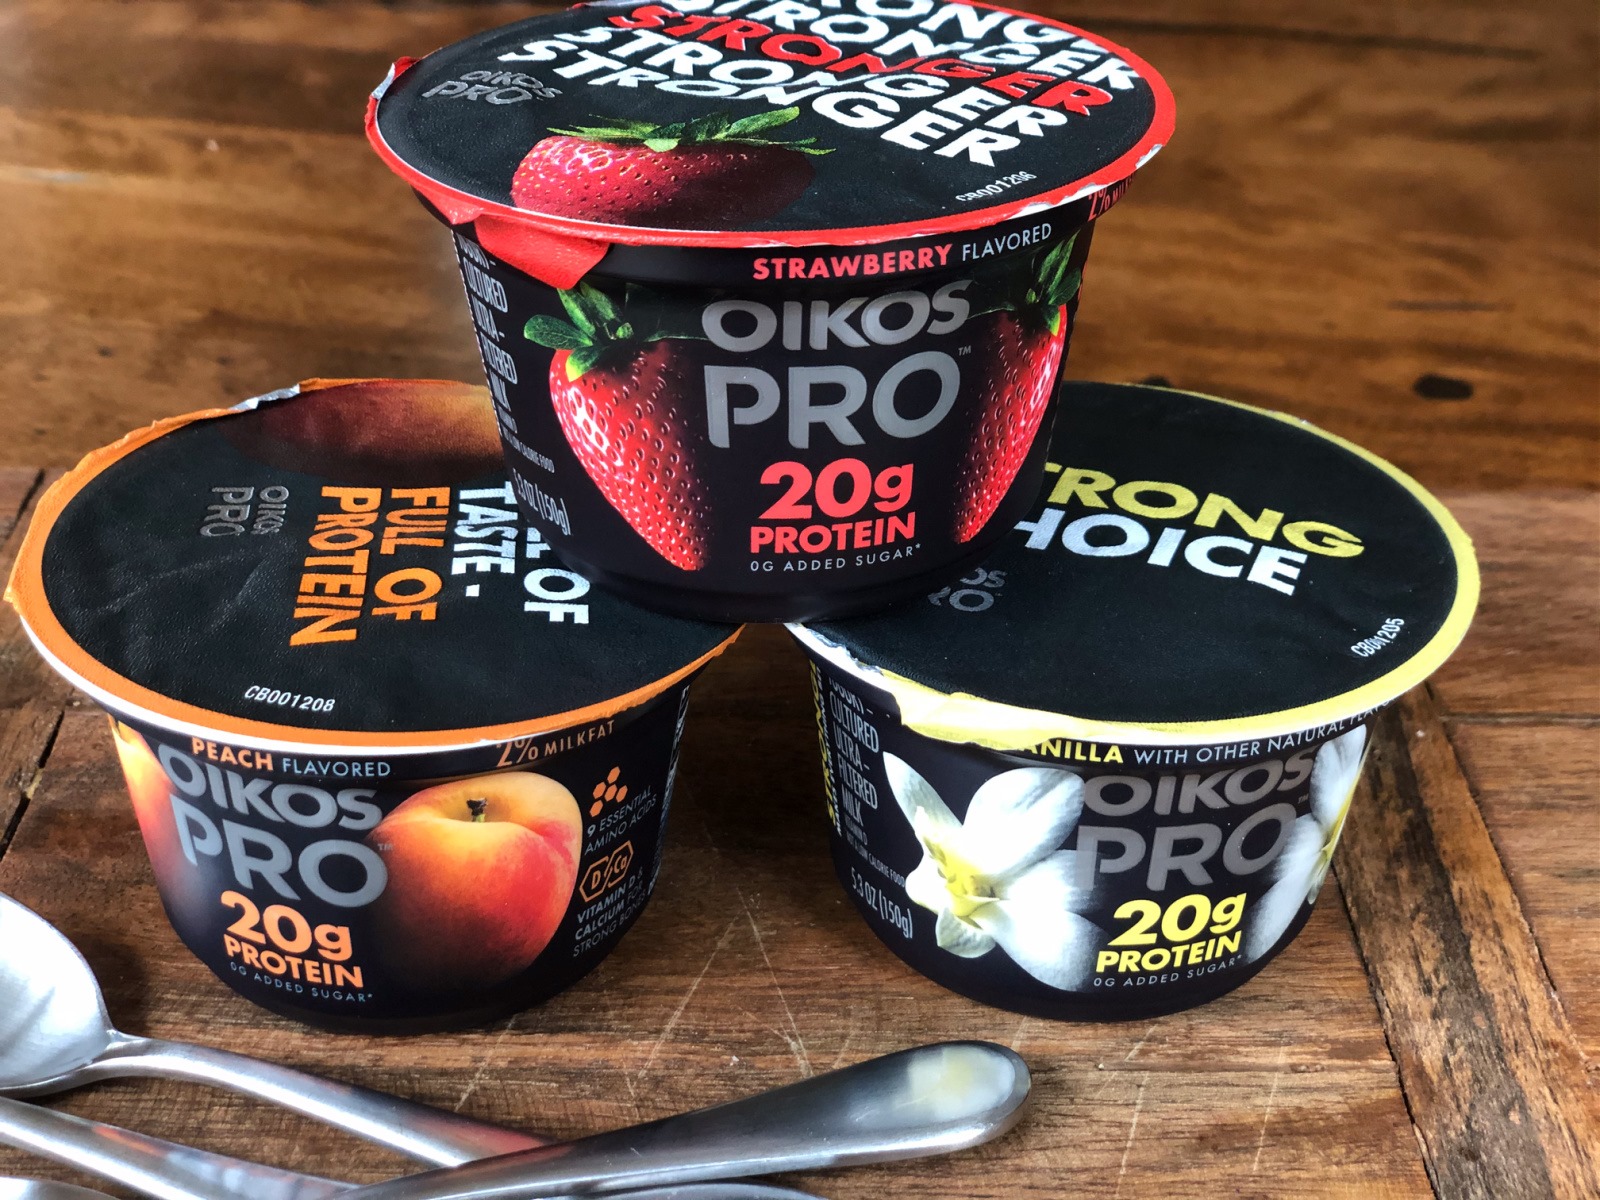 Free Oikos Pro Single Serve Yogurt At Kroger